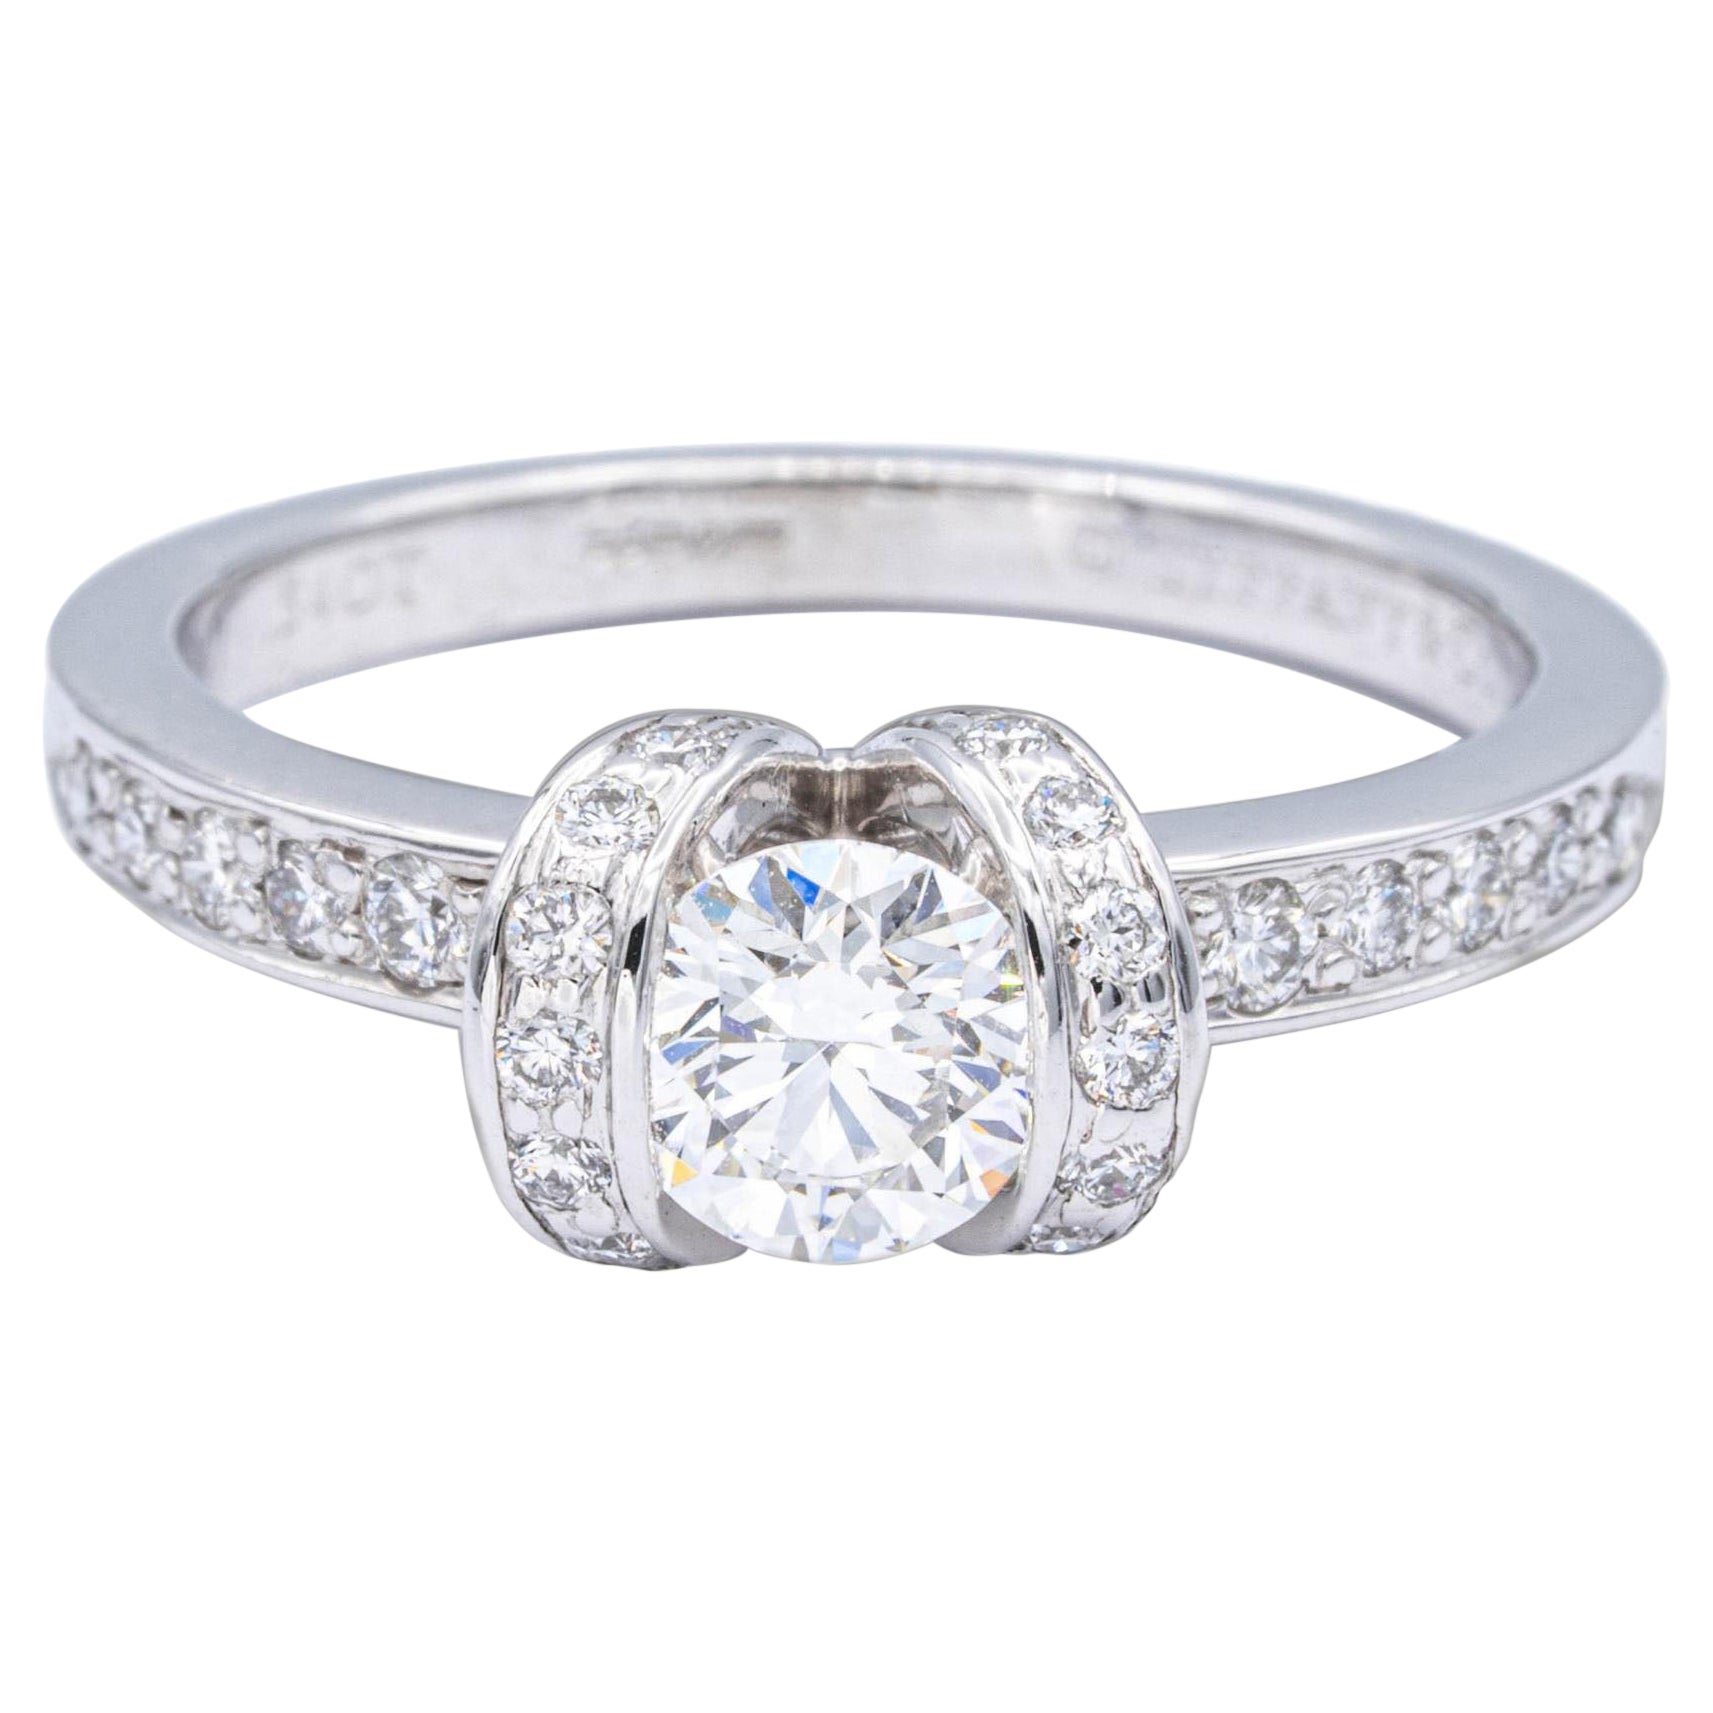 Tiffany & Co. Ribbon Platinum Diamond Engagement Ring 0.90 Ct TW Round Cut